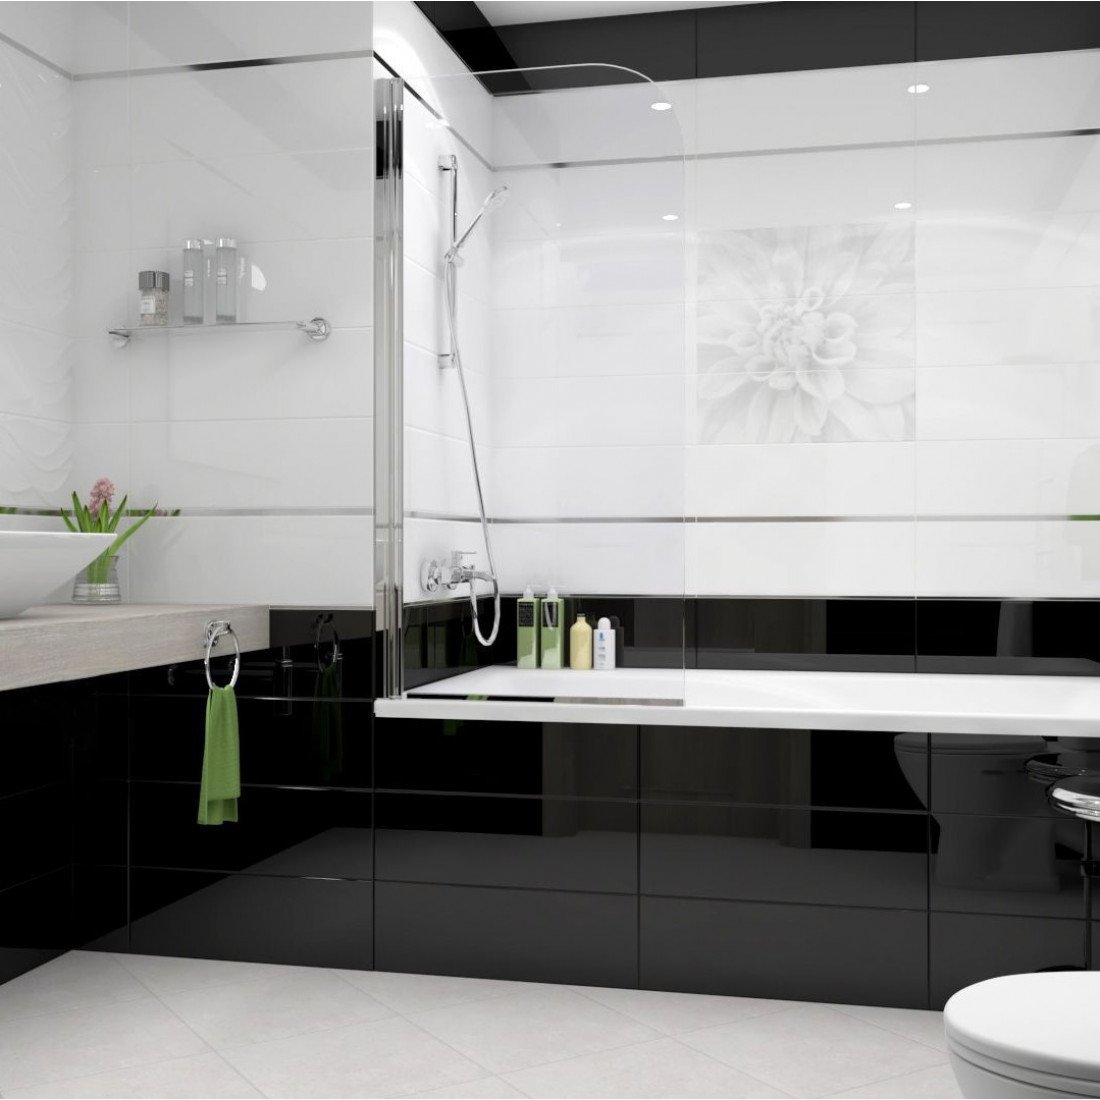 Черно белая ванная комната дизайн плитка